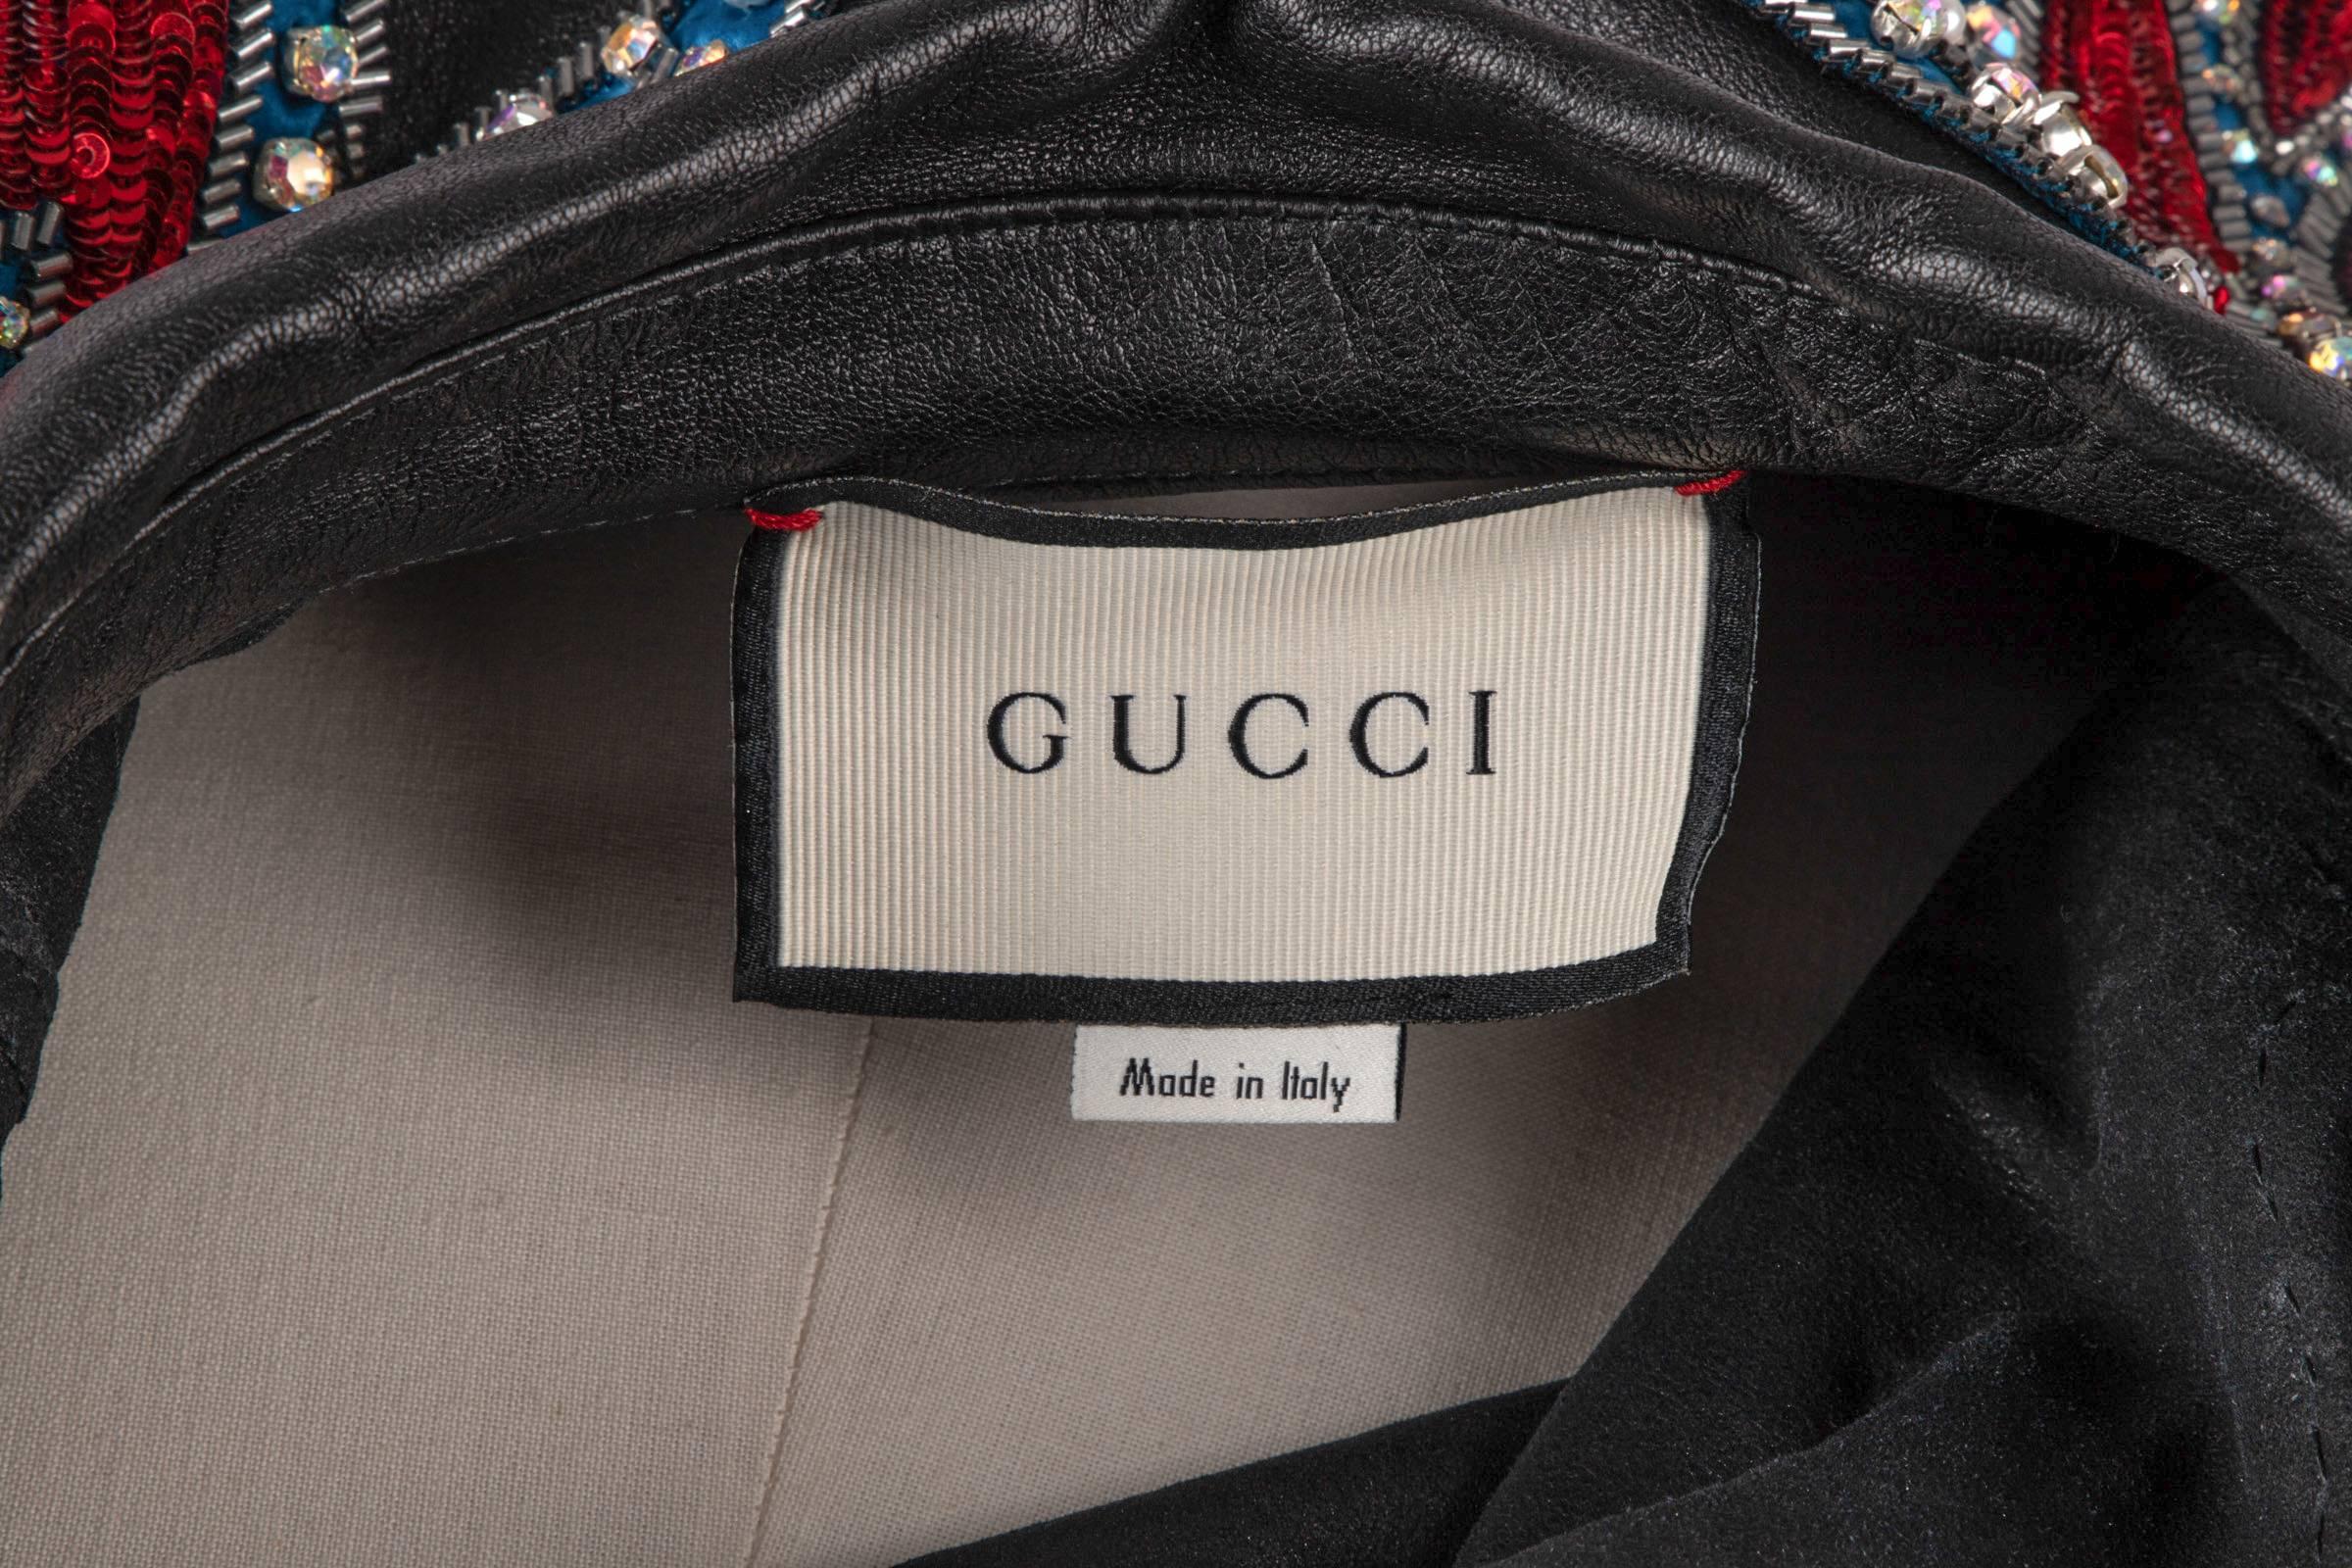 Gucci Top S/S 2018 Black Leather Bugle Bead Diamante Sequin Western 40 / 6 Rare 1